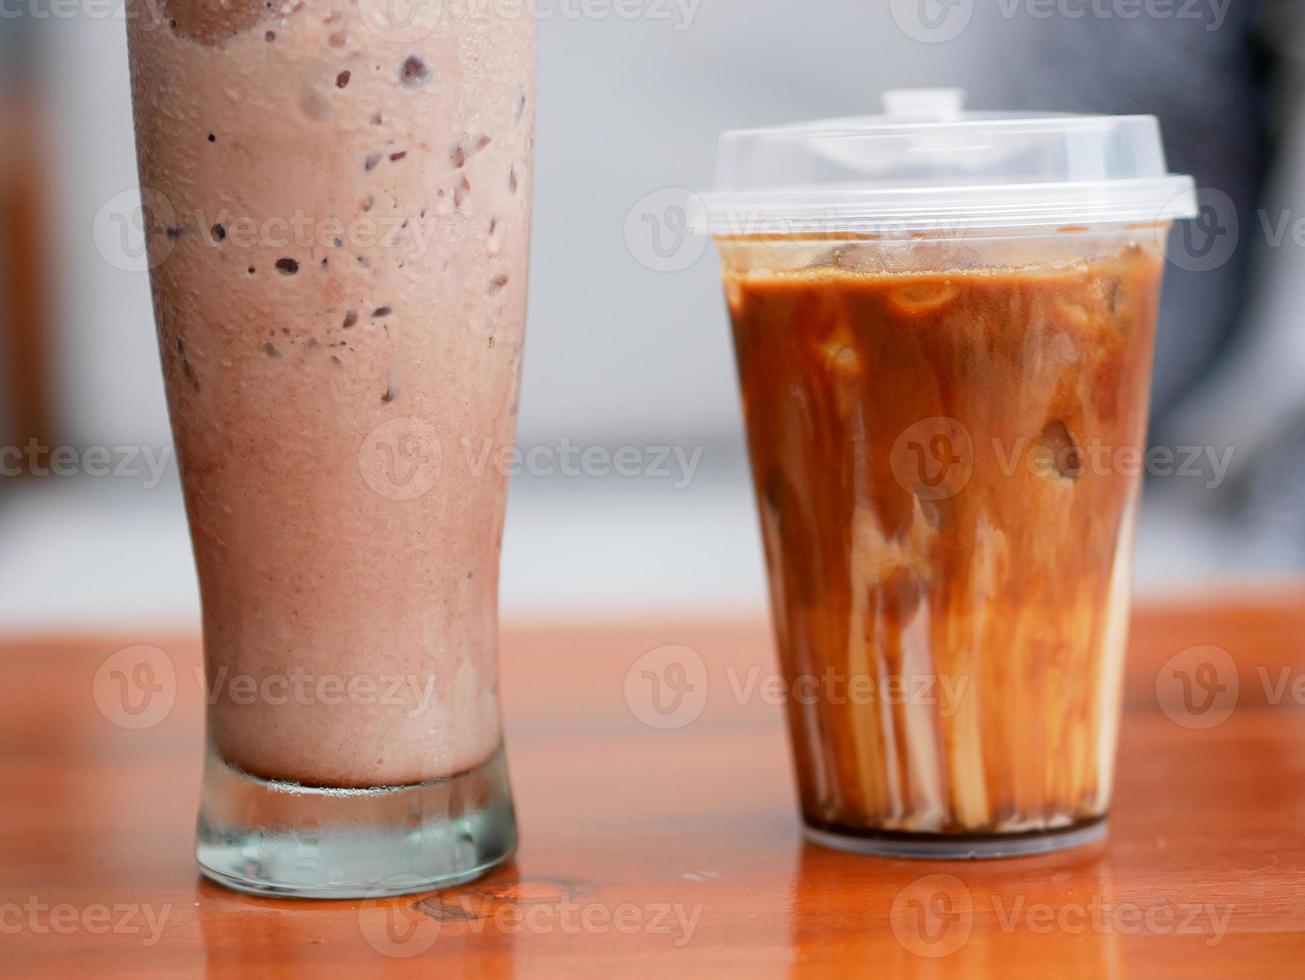 bebida de café con azúcar moreno fresco en un vaso de plástico transparente foto